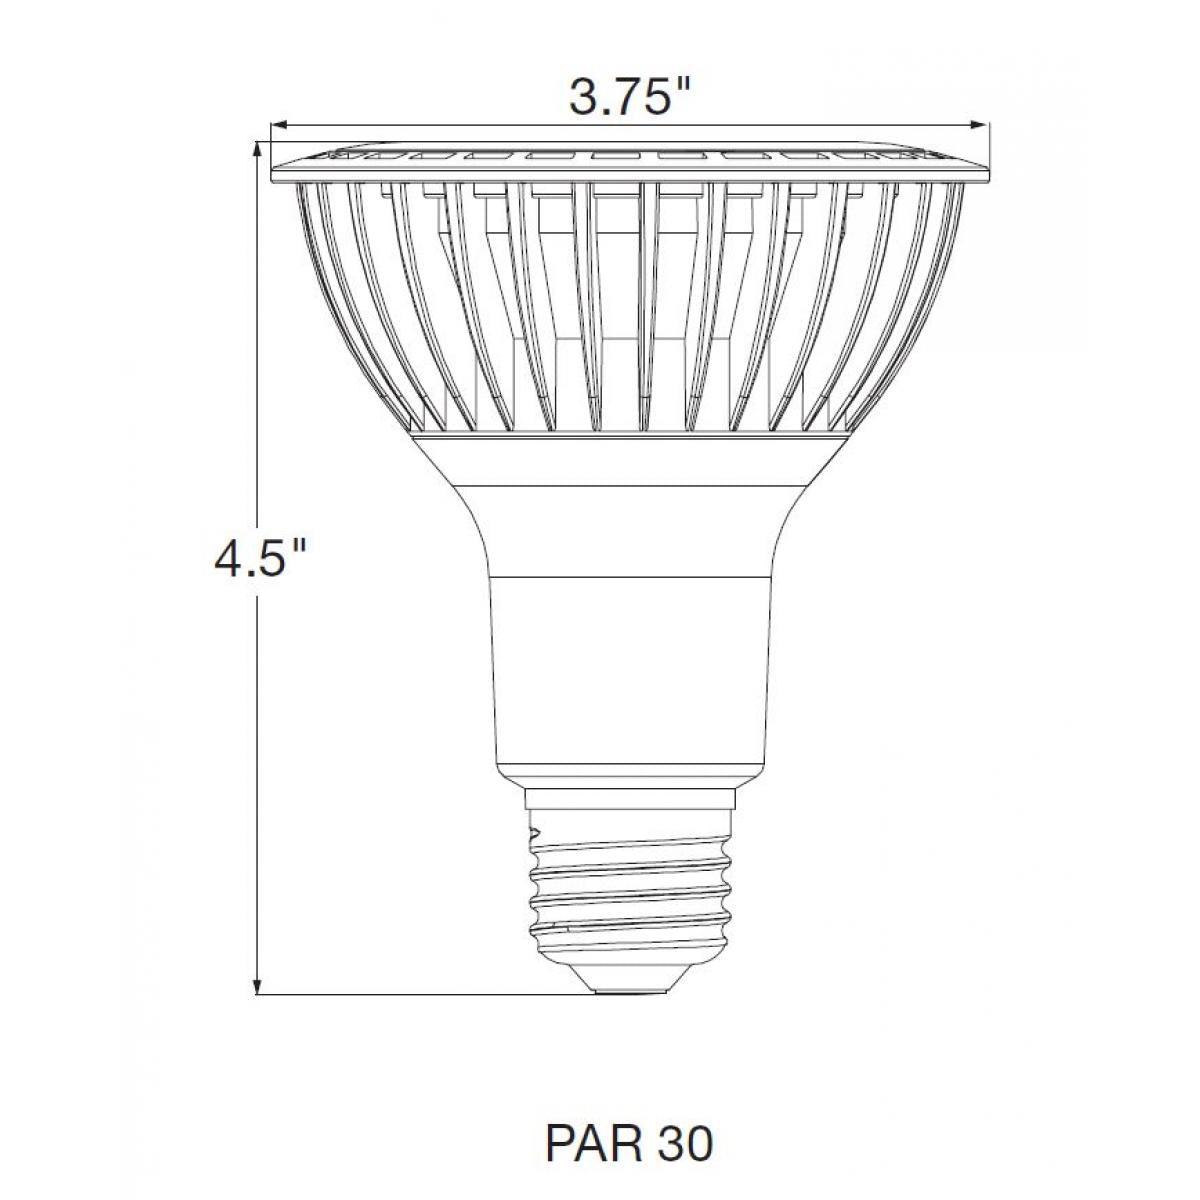 PAR30 Long Neck Reflector LED Bulb, 20 watt, 1800 Lumens, 3000K, E26 Medium Base, 40 Deg. Flood